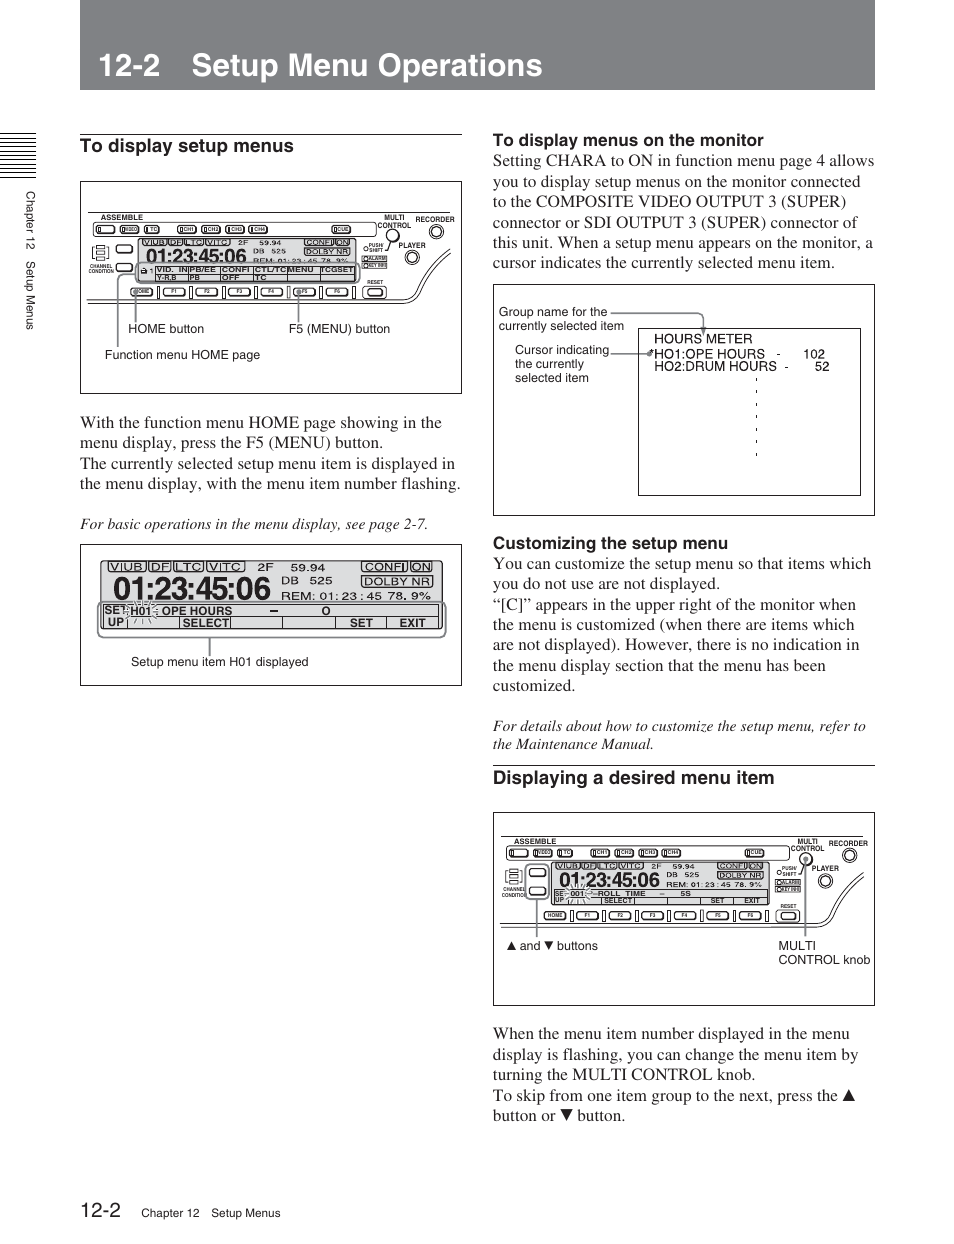 2 setup menu operations, Displaying a desired menu item | Sony DVW-2000 User Manual | Page 108 / 155